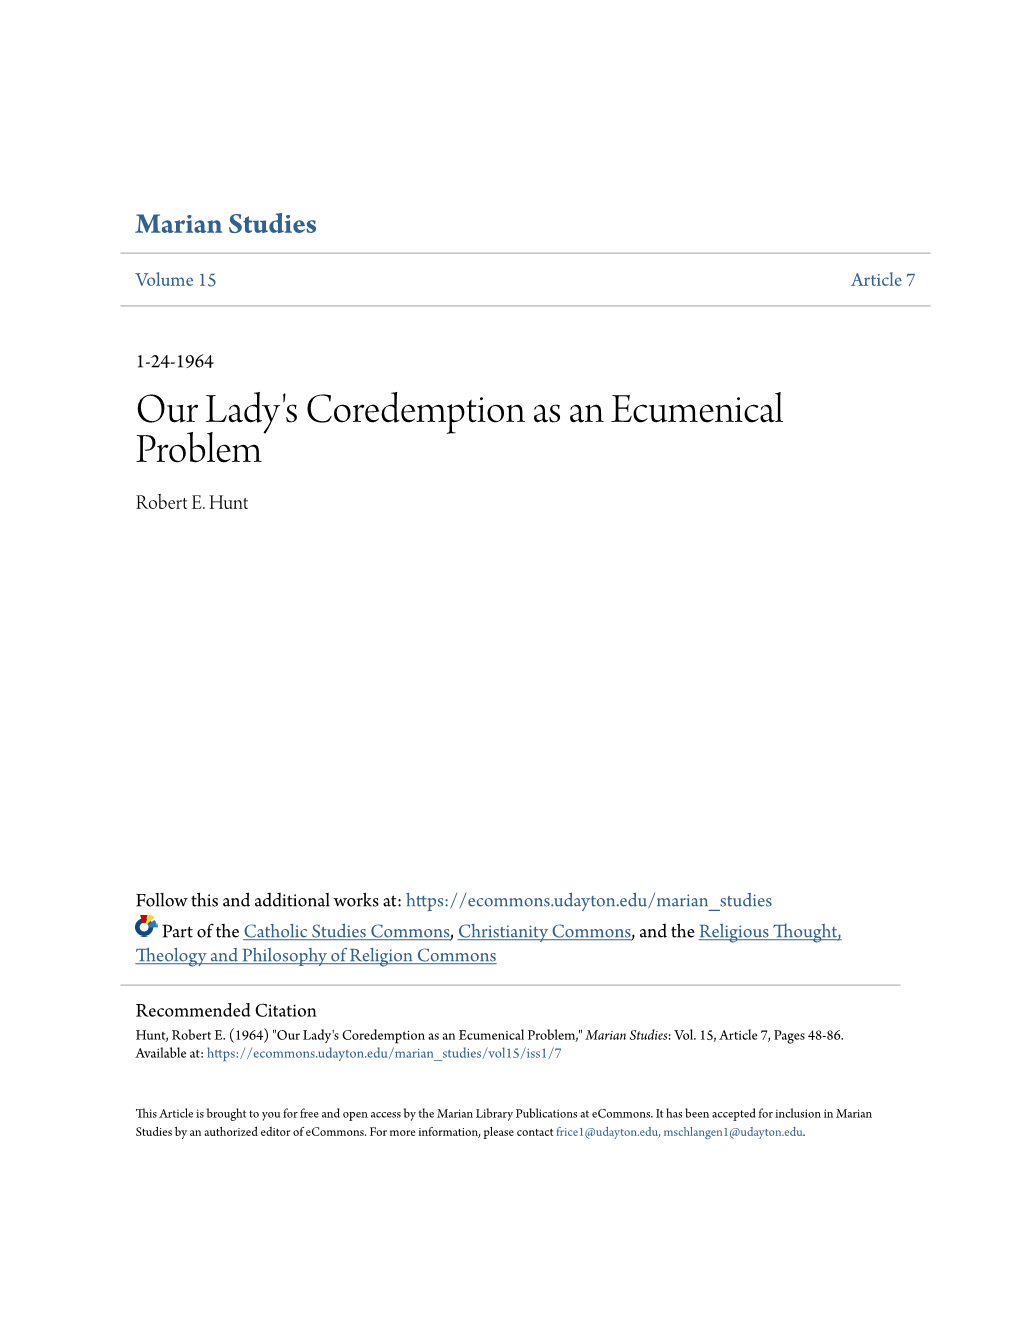 Our Lady's Coredemption As an Ecumenical Problem Robert E